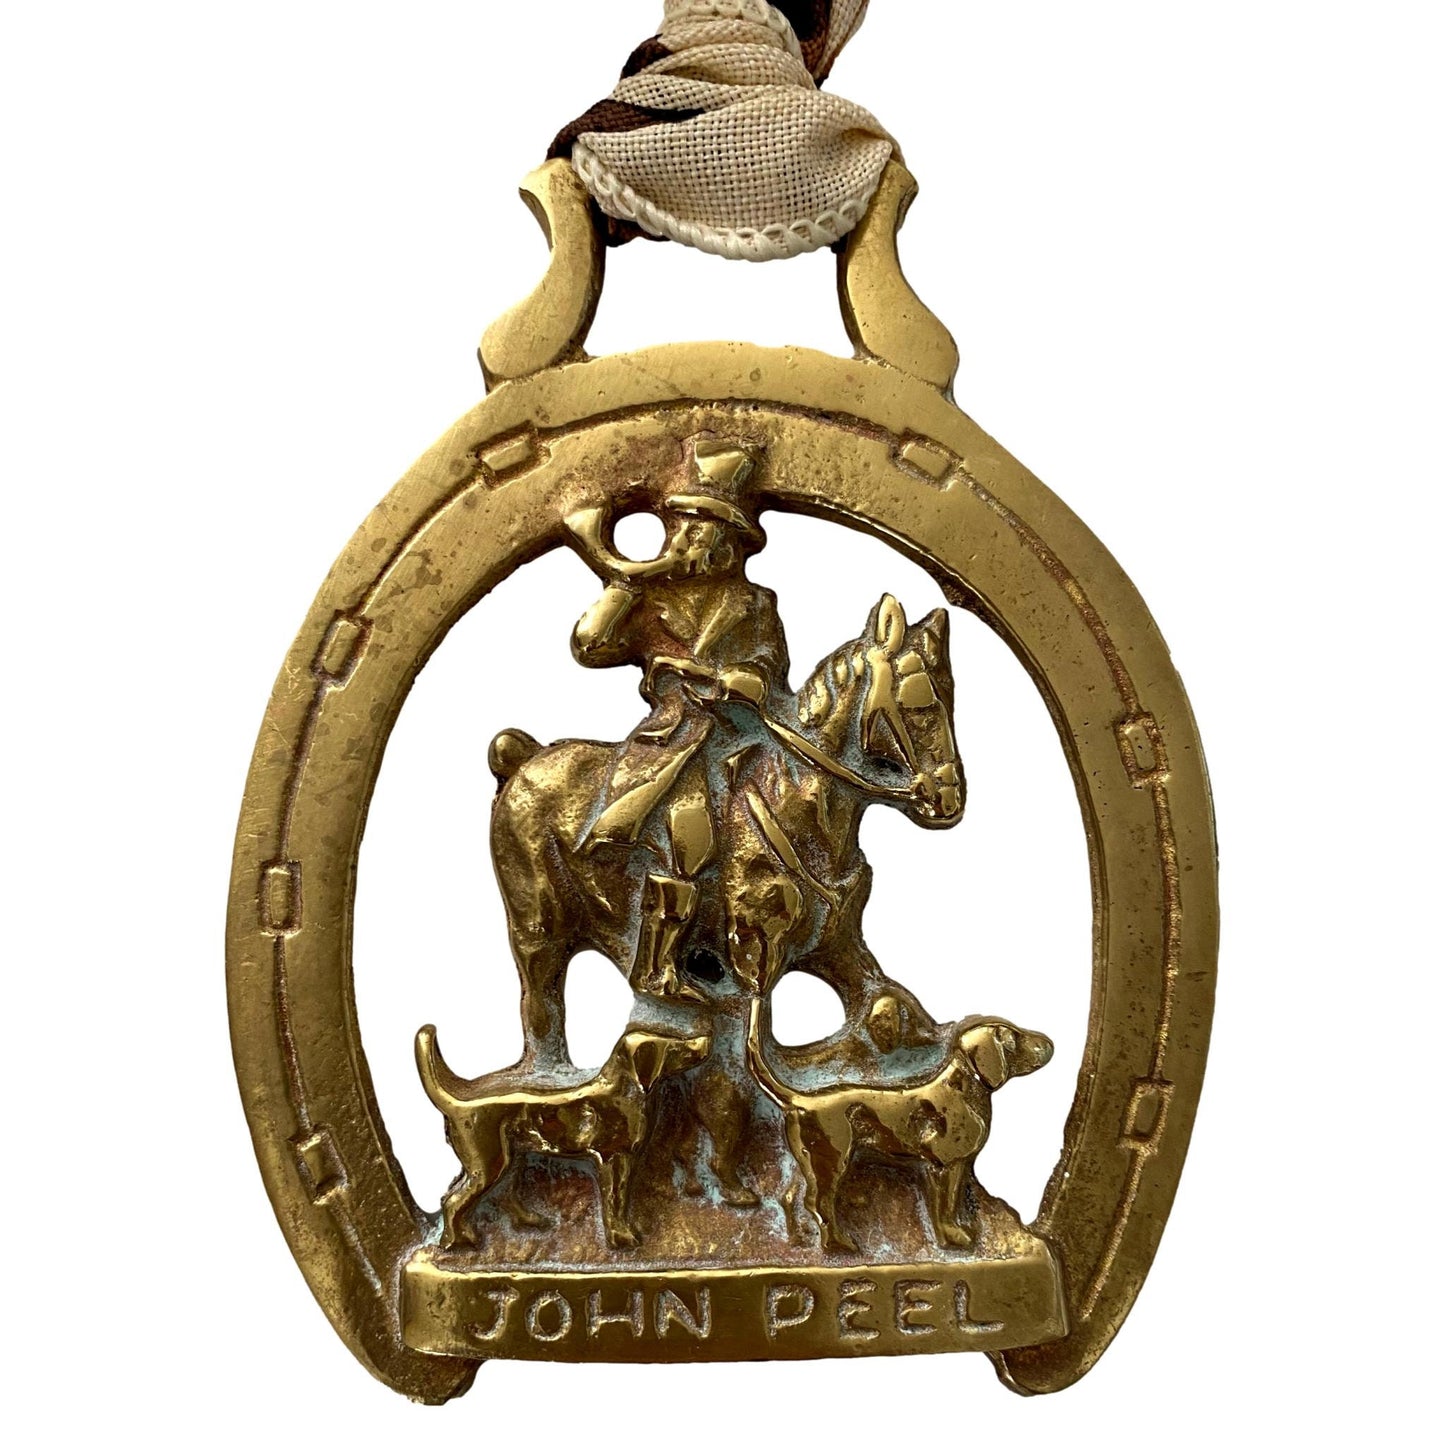 Antique English Horse Brass Christmas Ornament